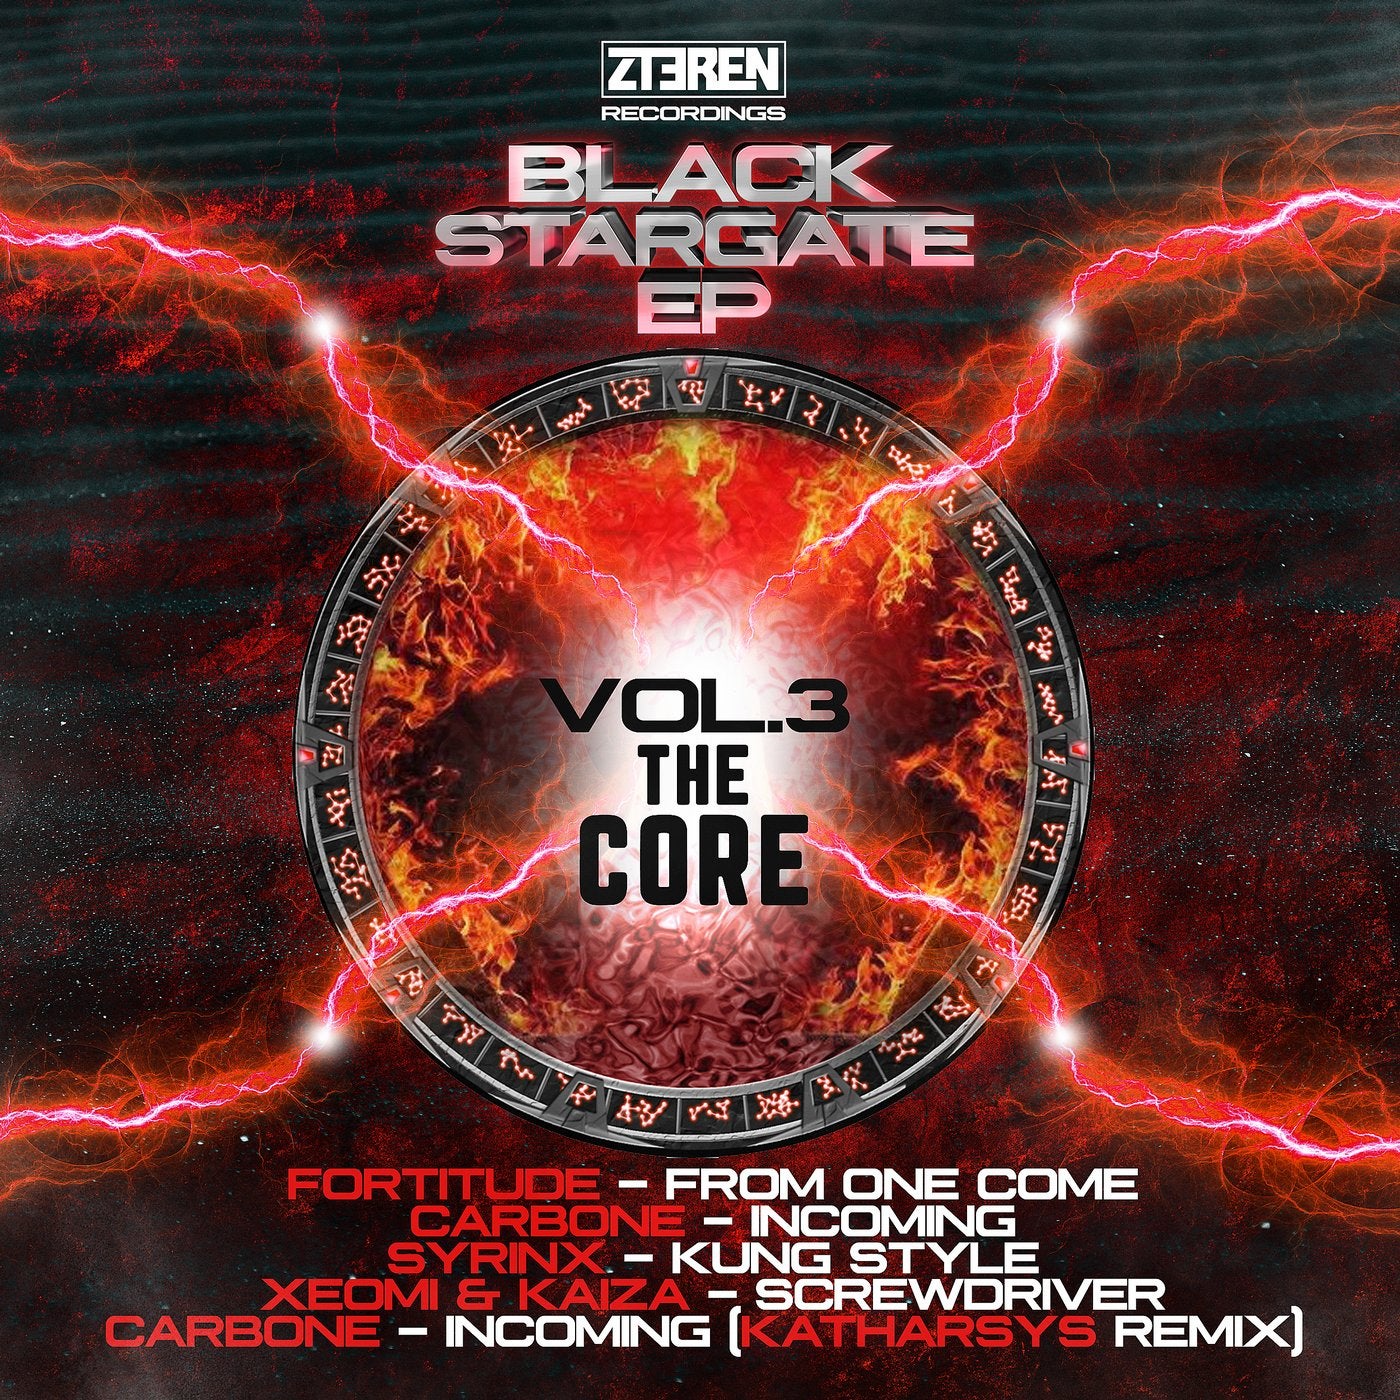 Black Stargate Volume 3 The Core